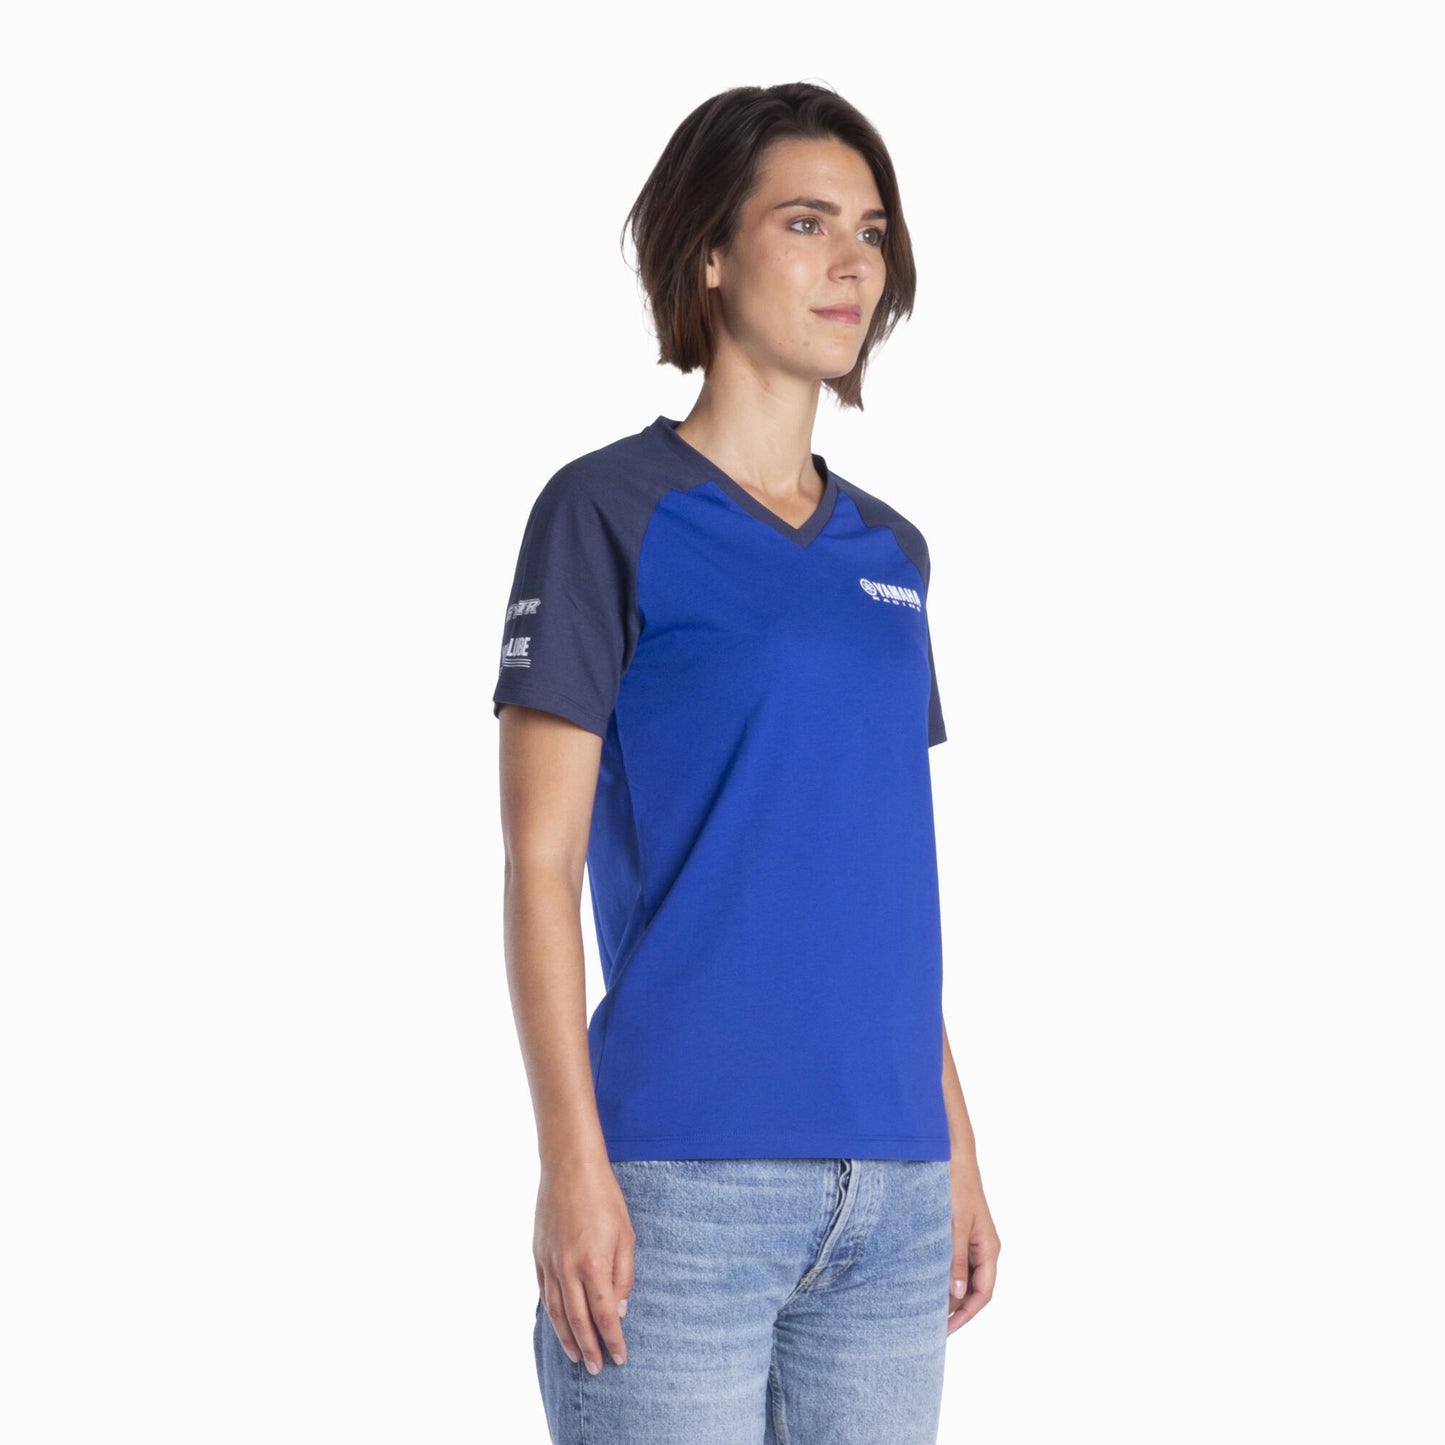 Paddock Blue Women’s T-Shirt